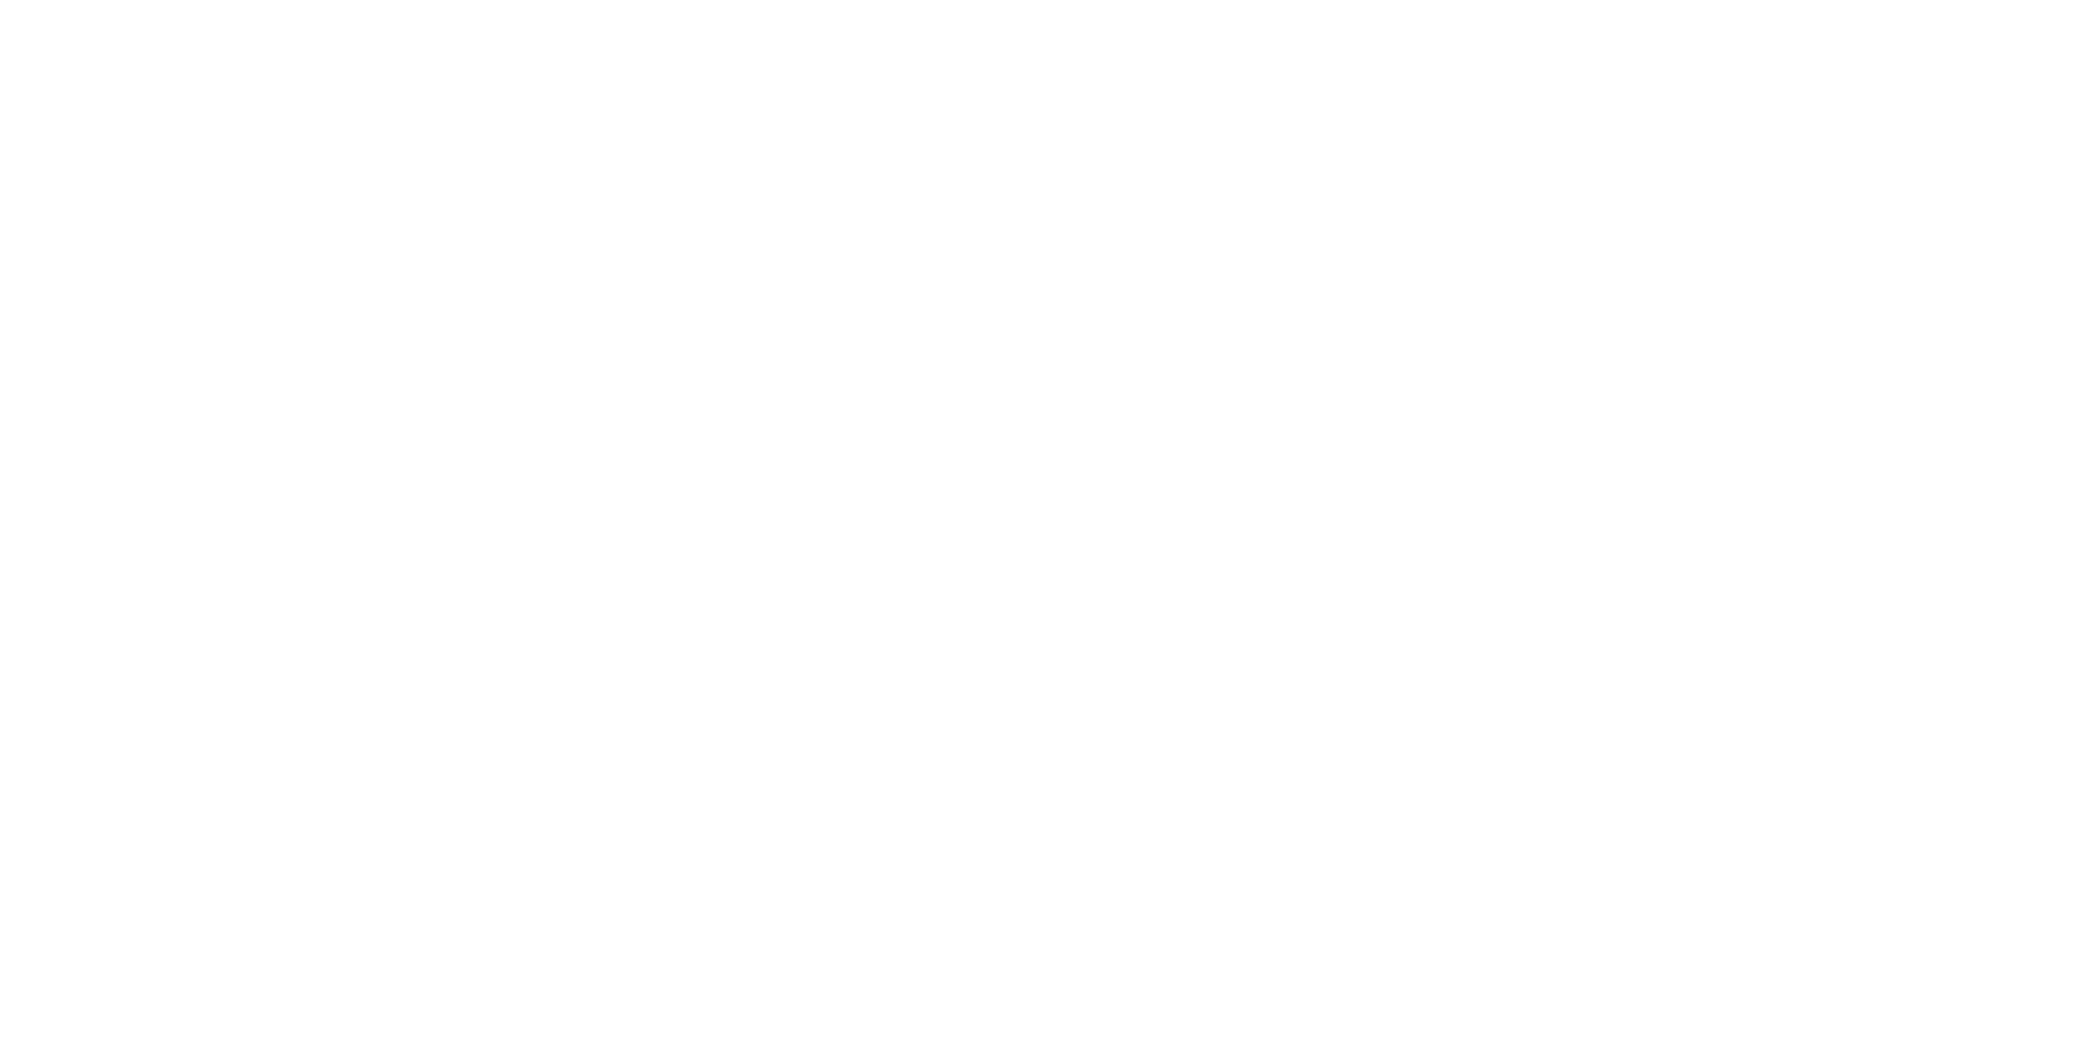 Best School Award 2022